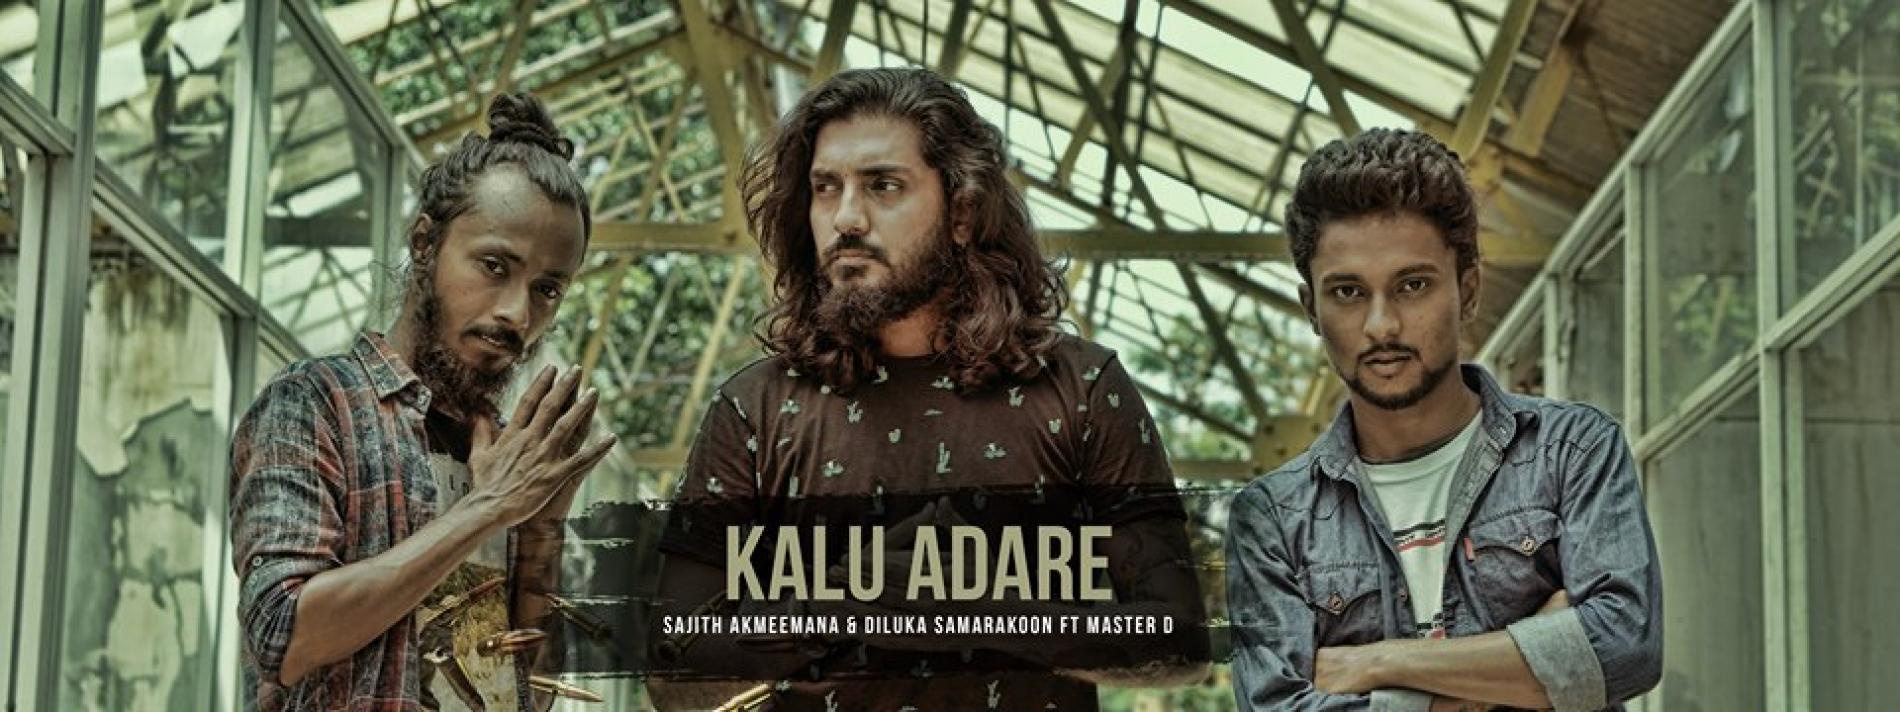 KALU ADARE | Sajith Akmeemana & Diluka Ft Master D